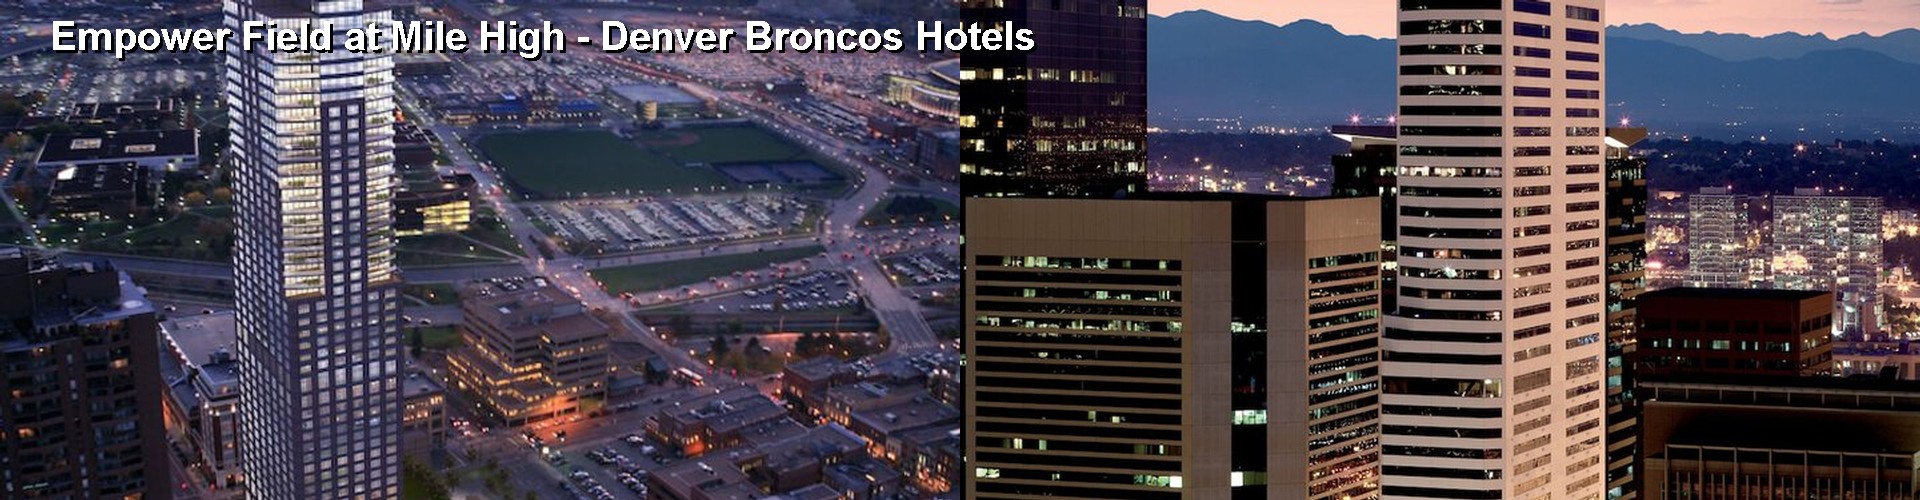 5 Best Hotels near Empower Field at Mile High - Denver Broncos